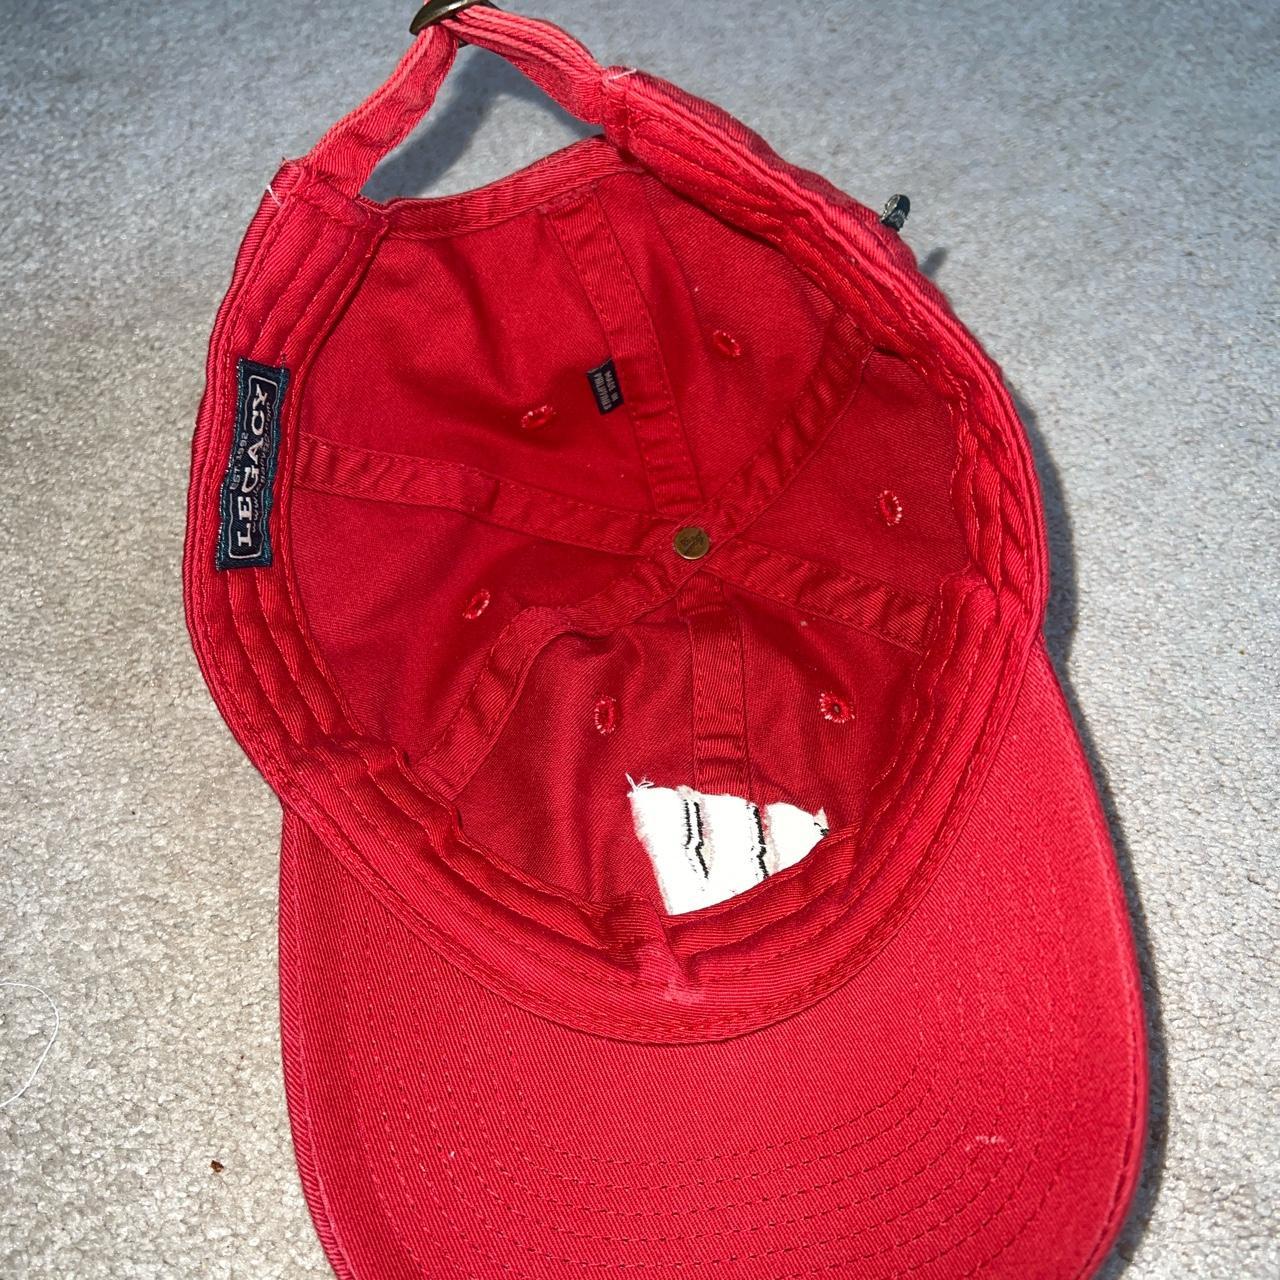 Product Image 3 - UW MADISON STANDARD BASEBALL CAP

RED

great